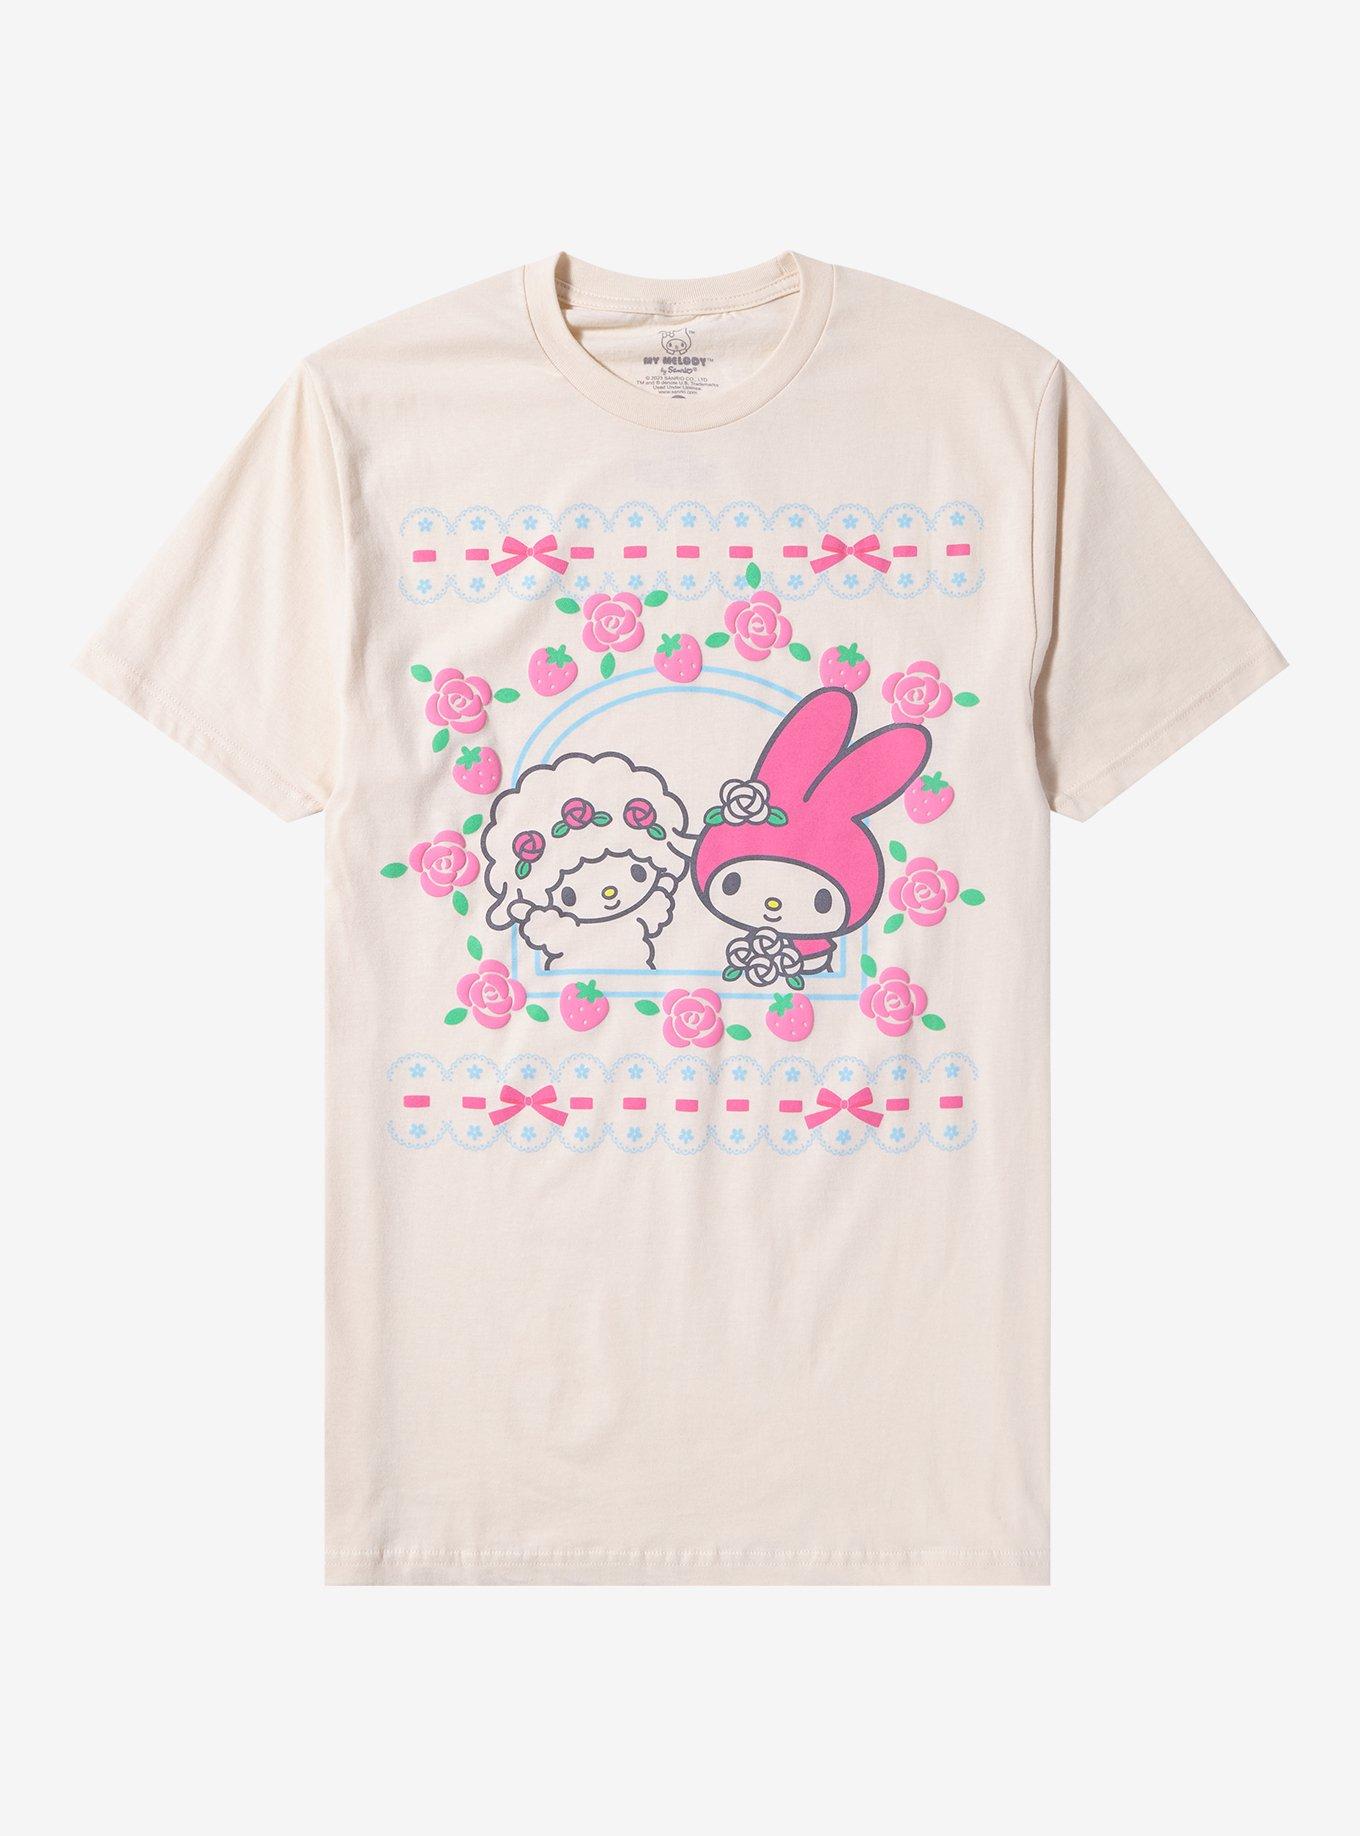 My Melody & My Sweet Piano Flower Coquette Boyfriend Fit Girls T-Shirt